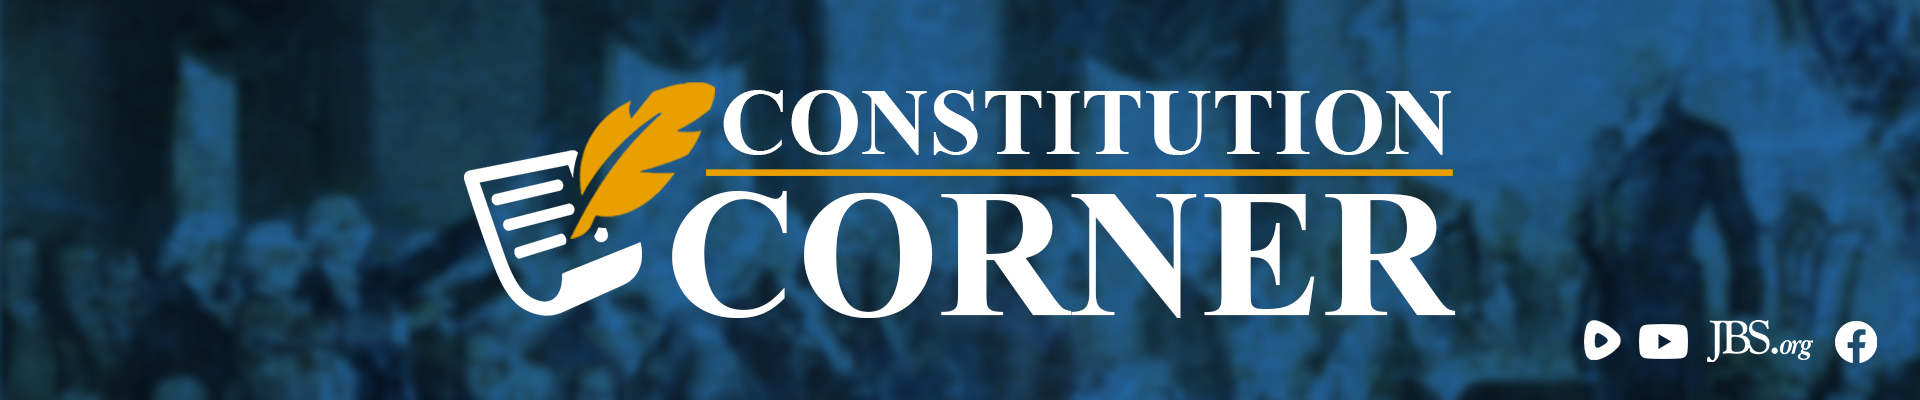 John Birch Society Video: Constitution Corner